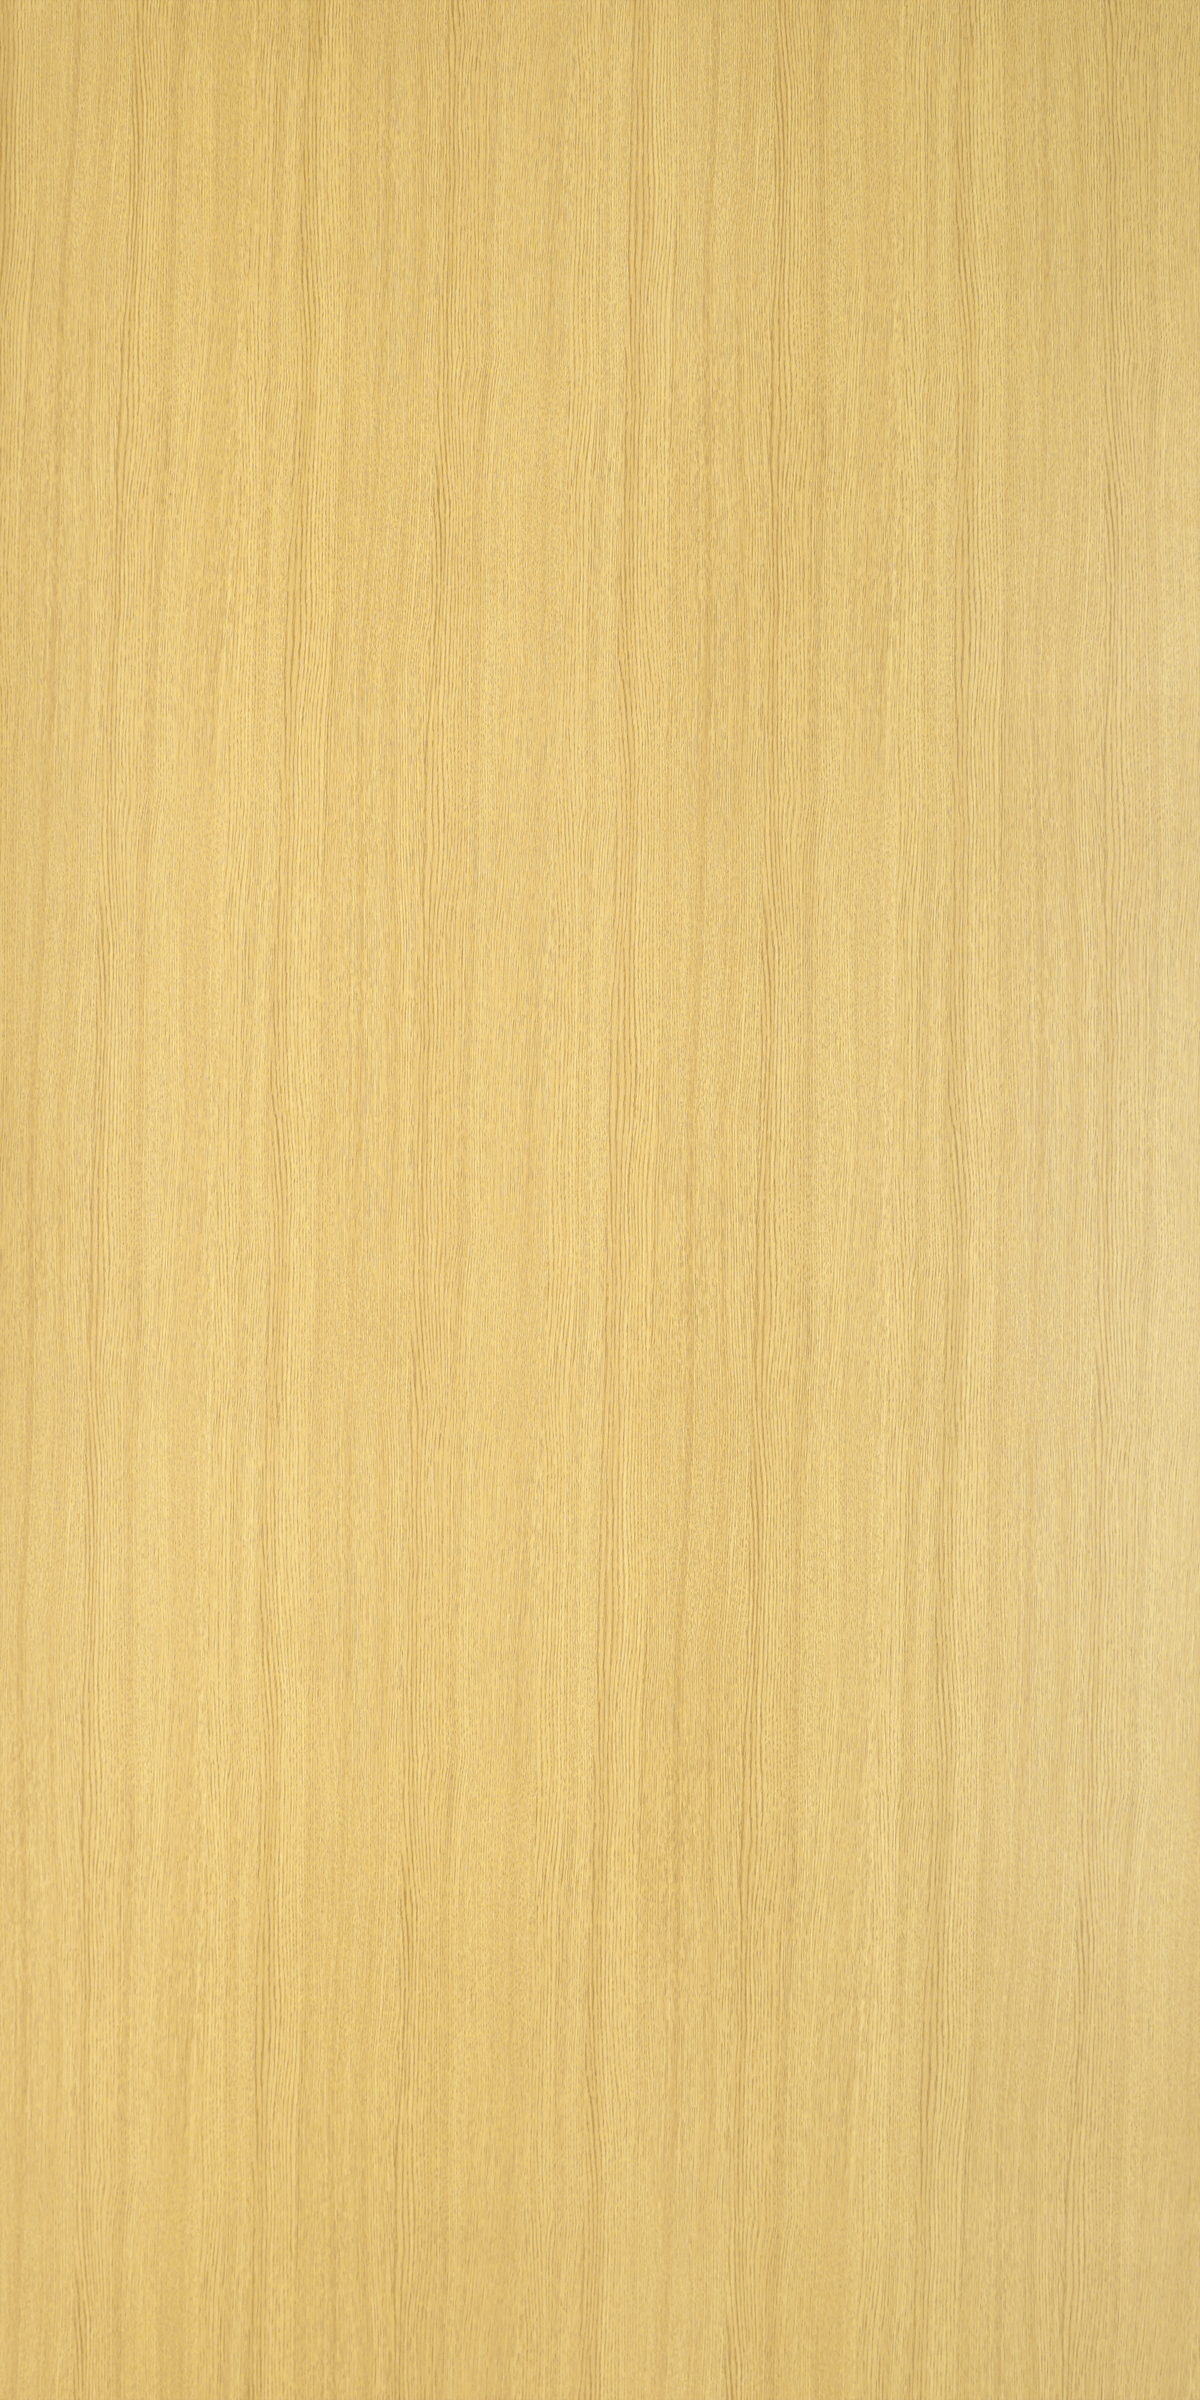 5049 Red Oak (SUD/GLS/VRB/SAT) interior wall cladding in India